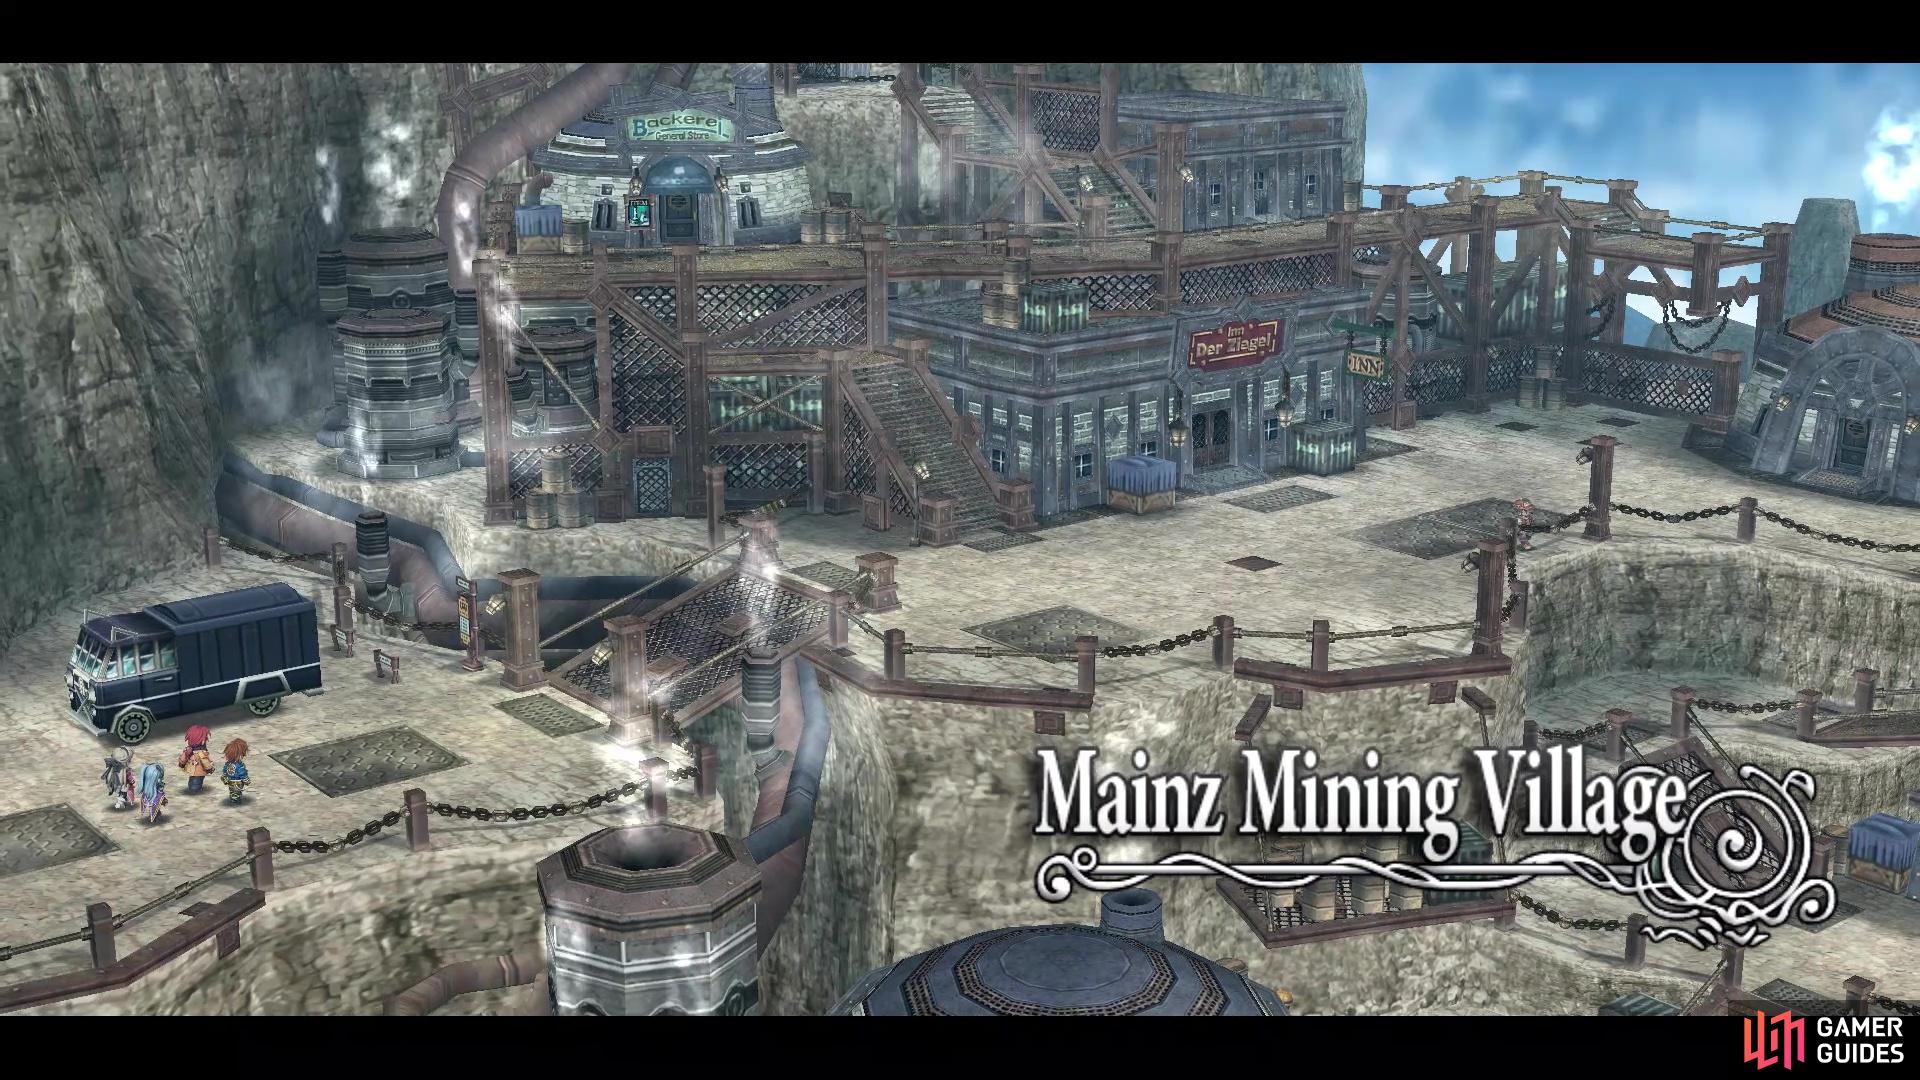 Finally, it’s the Mainz Mining Village!